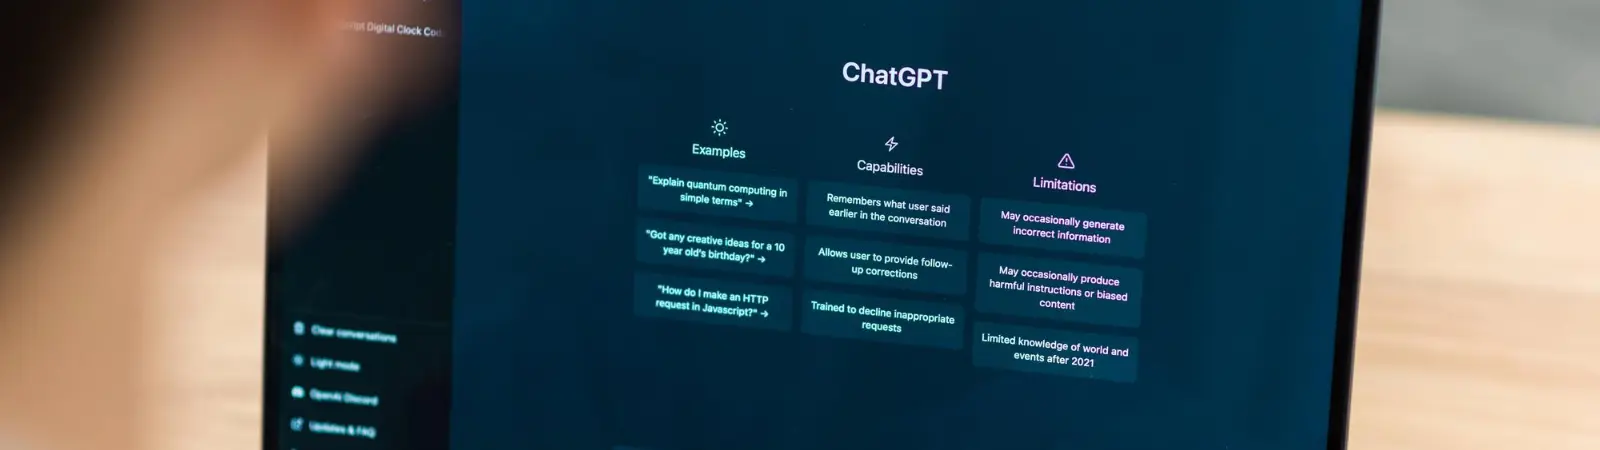 Co je to ChatGPT - Generative Pre-trained Transformer